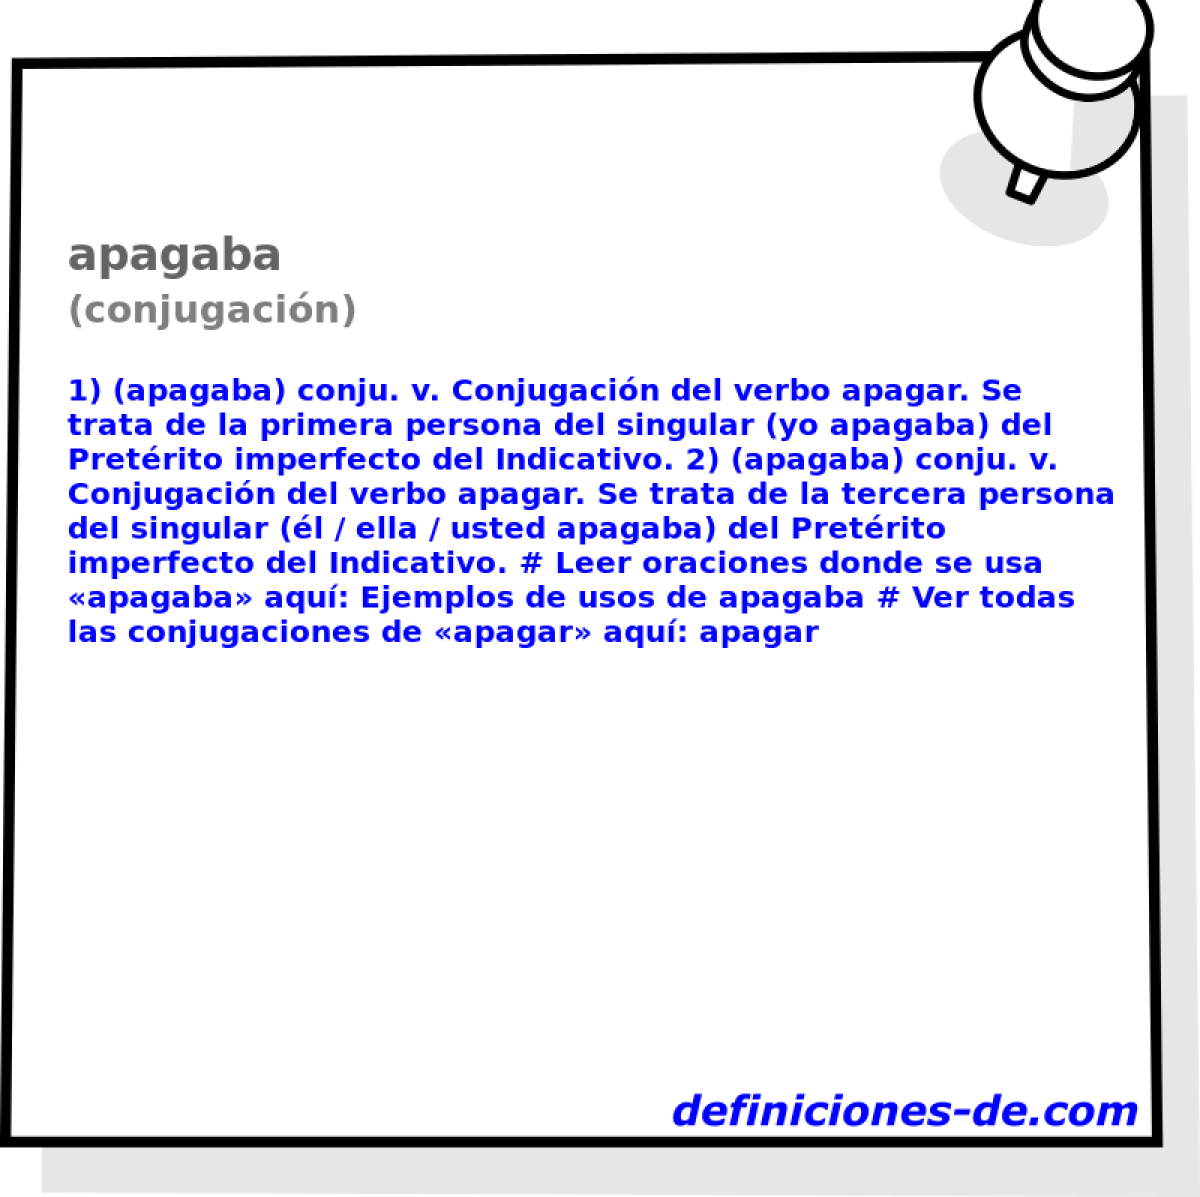 apagaba (conjugacin)